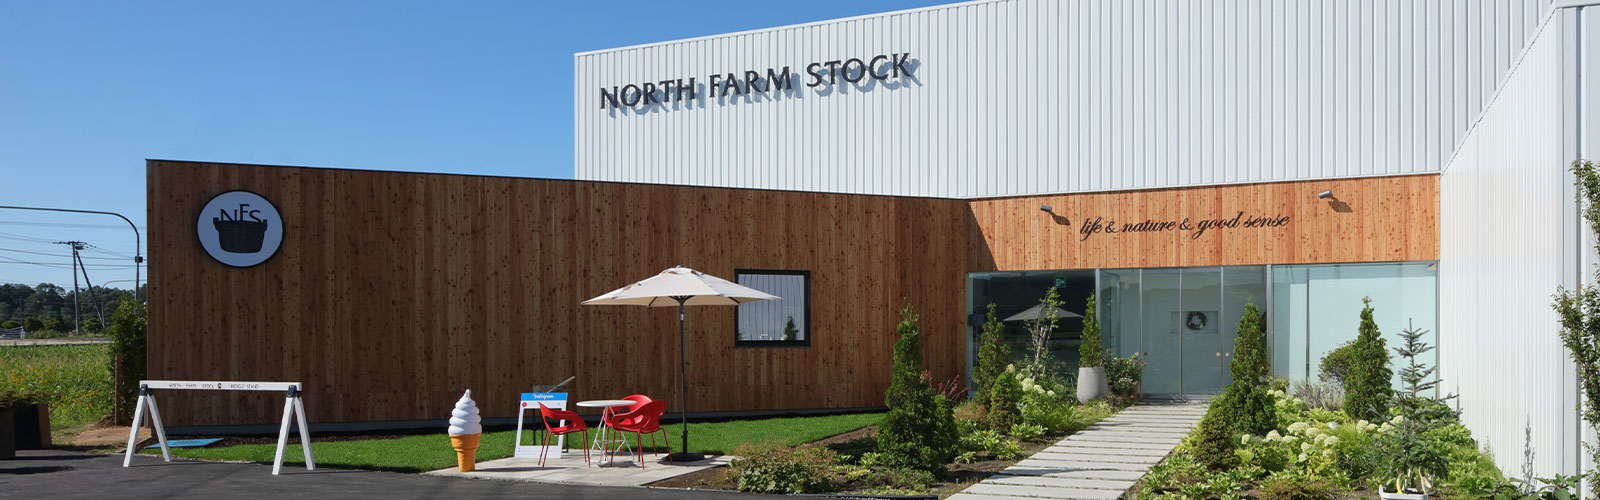 NORTH FARM STOCK SHOP & CAFE